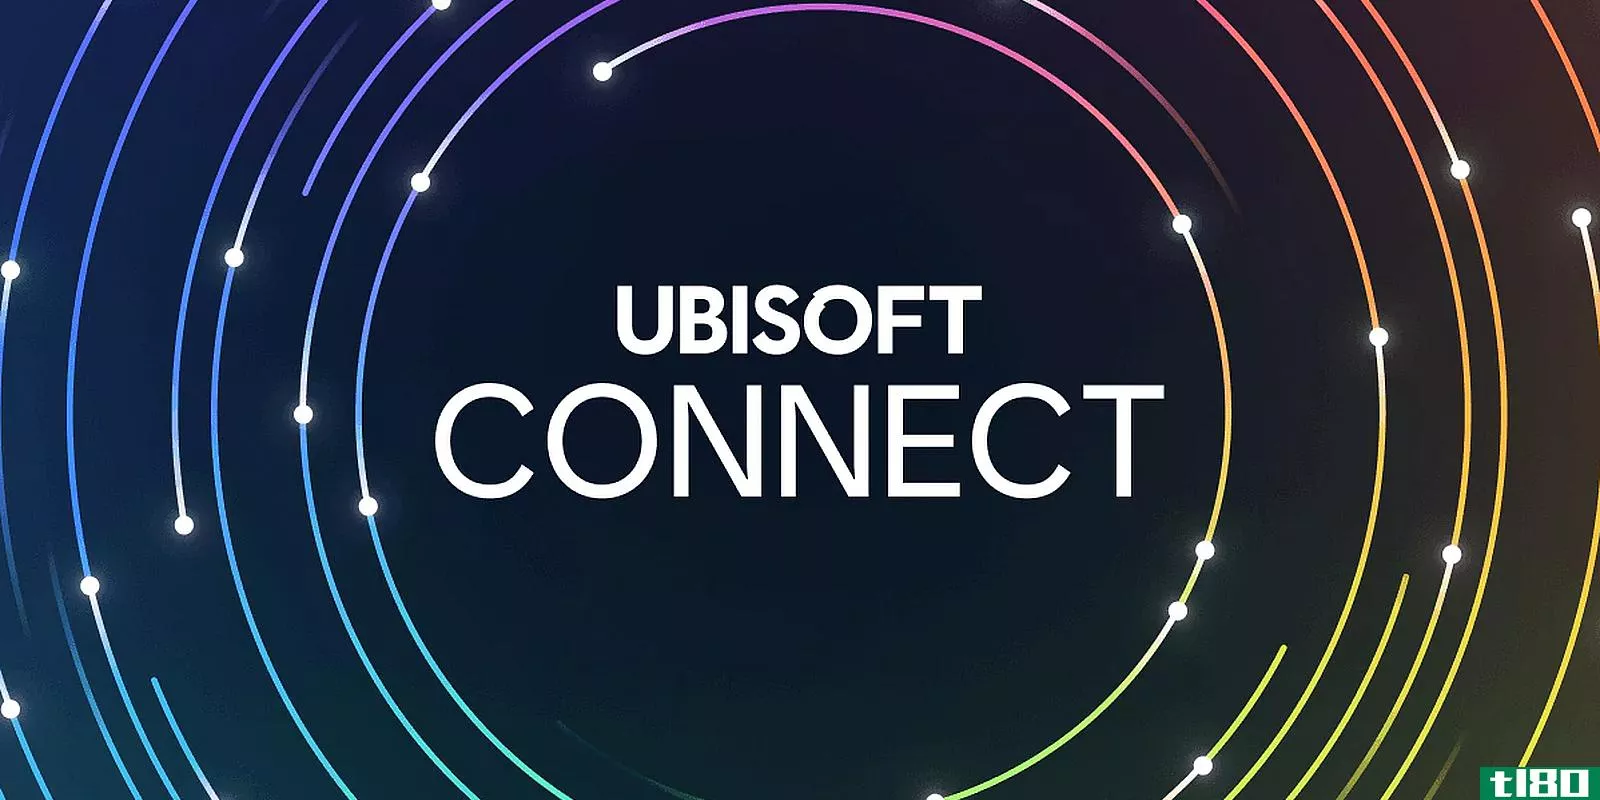 ubisoft connect logo